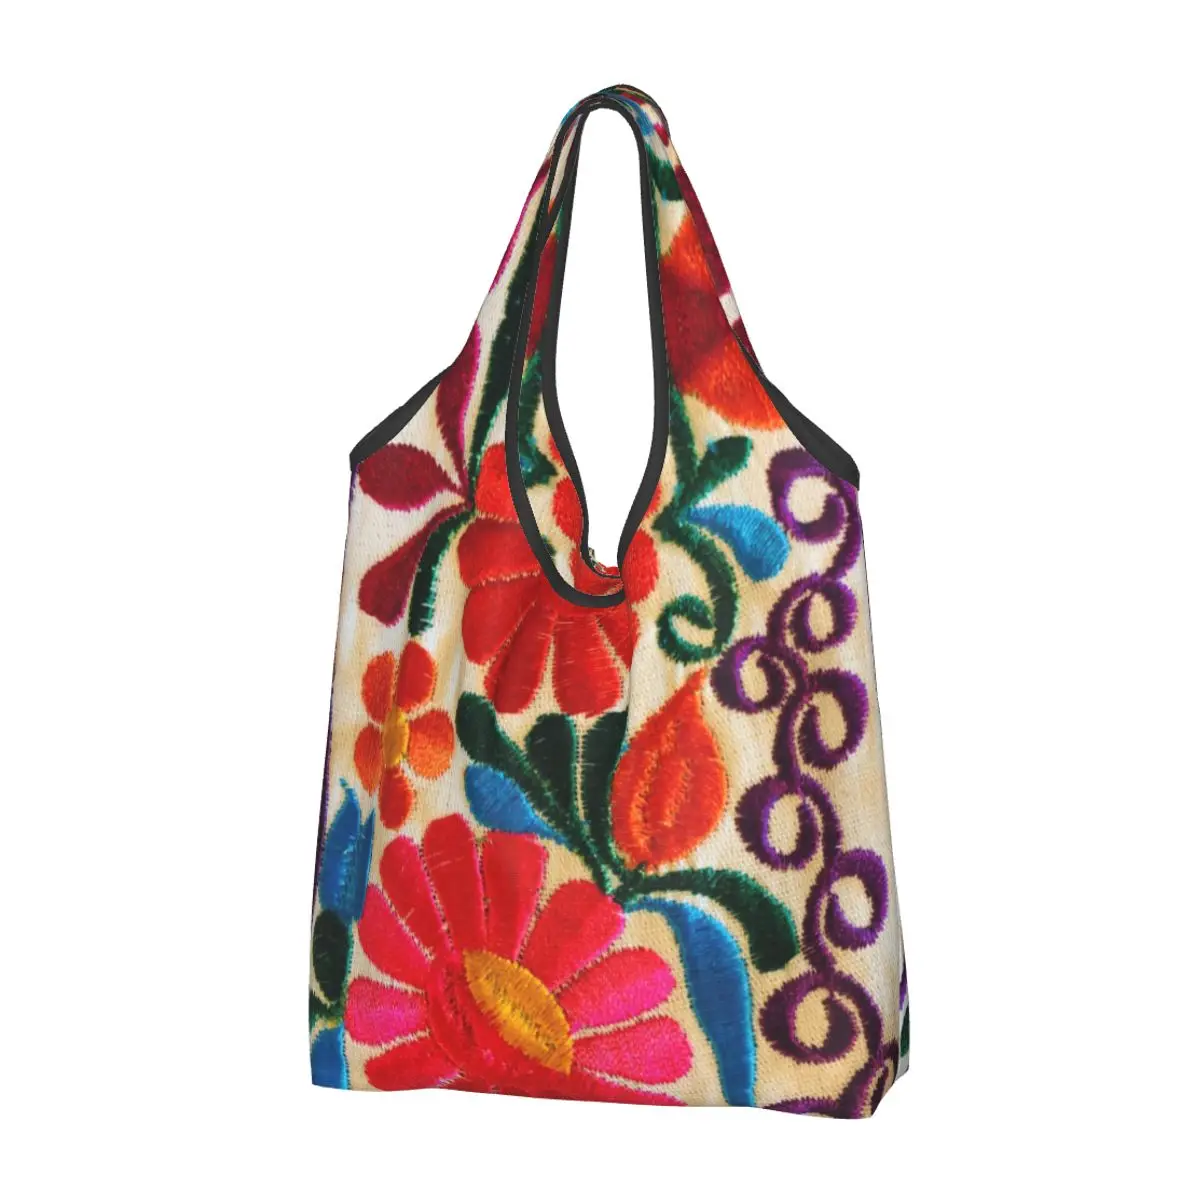 Mexican Flowers Embroidery Art Groceries Tote Shopping Bag Women Textile Floral Folk Shoulder Shopper Bag Large Capacity Handbag